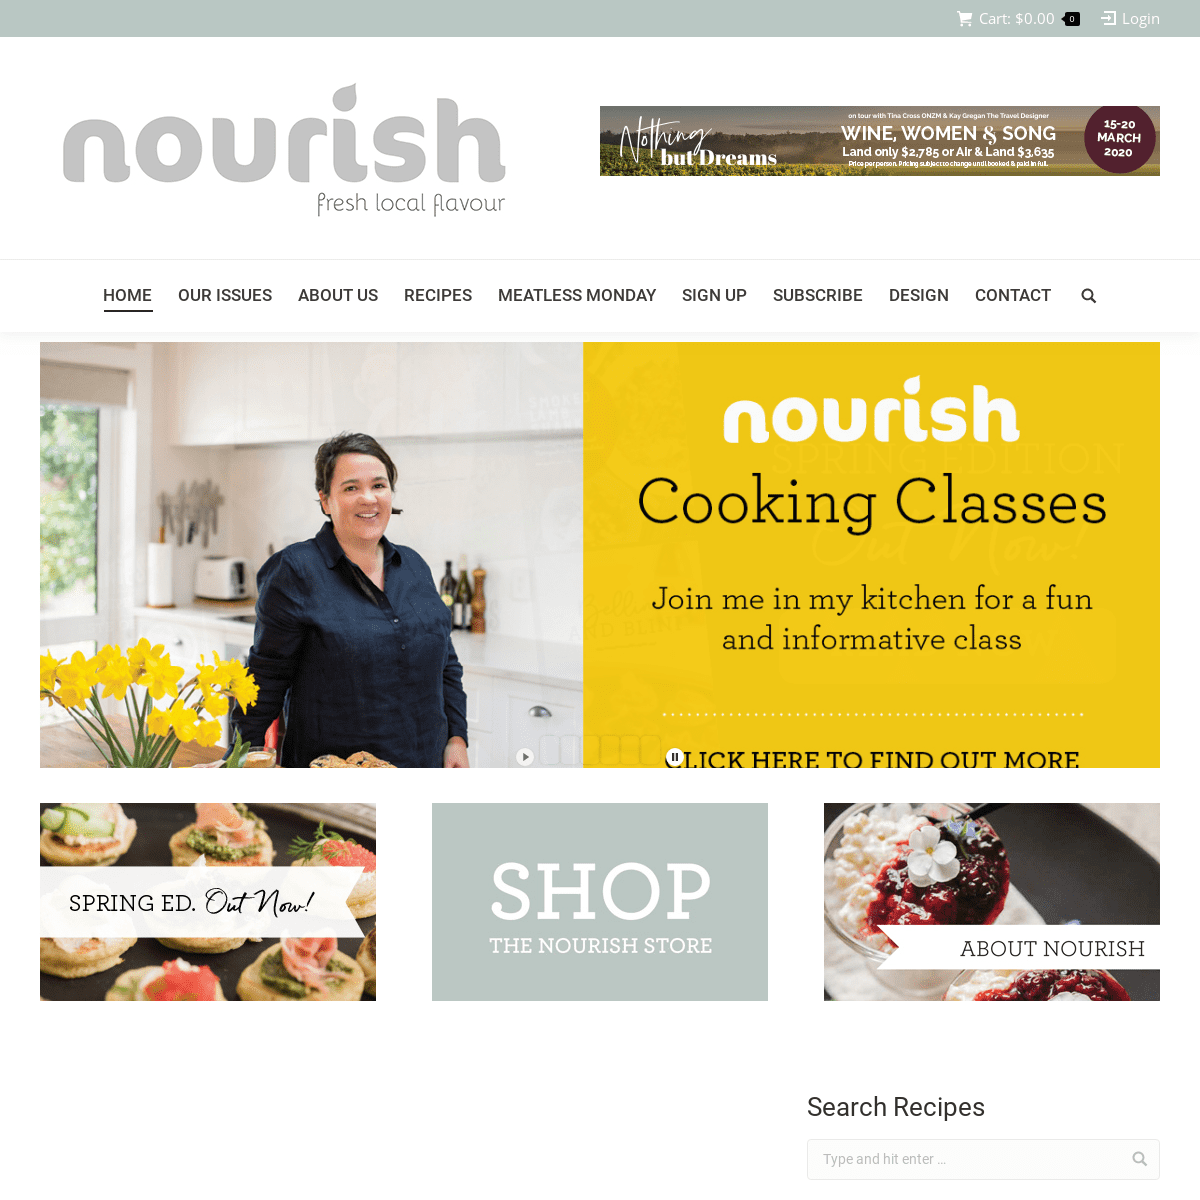 Nourish Magazine | Free Recipes, Healthy Food Ideas, News & Events